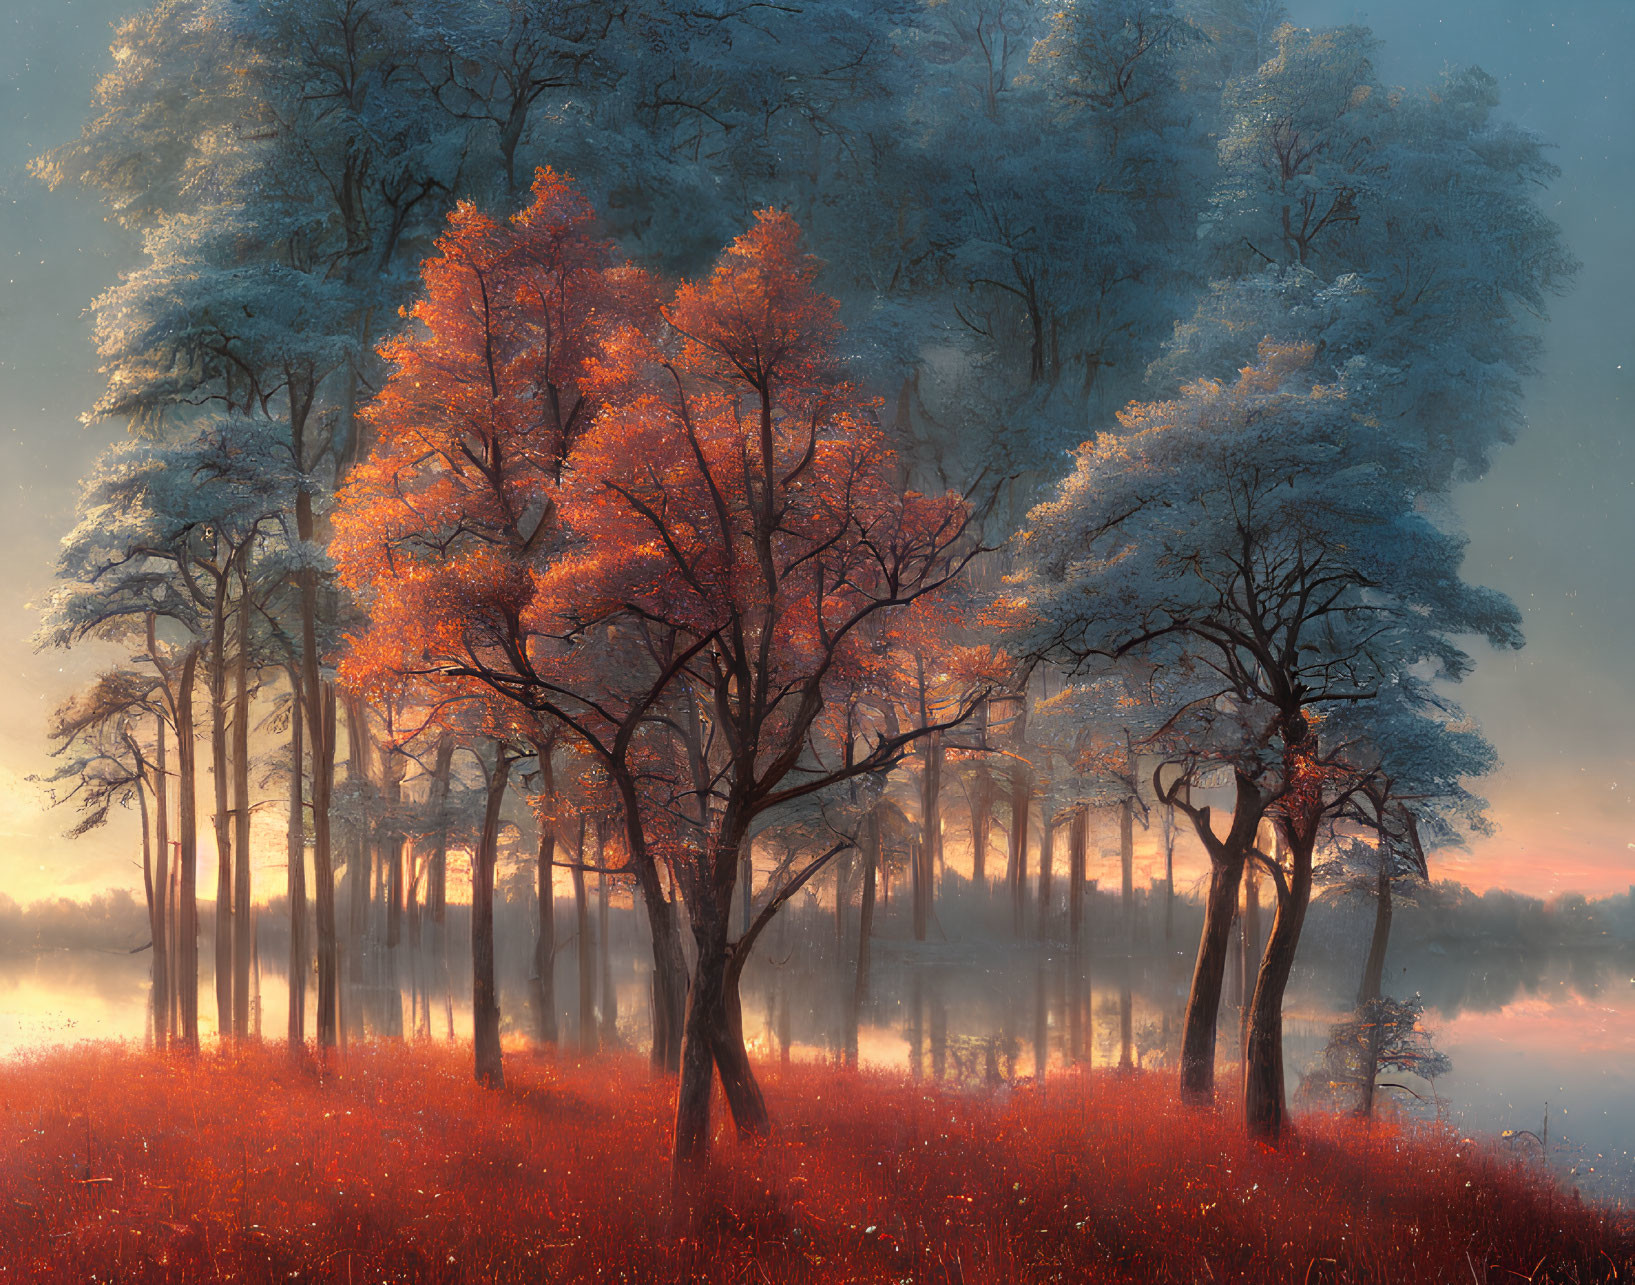 Twilight forest scene: fiery orange and icy blue foliage, mist, soft glowing light